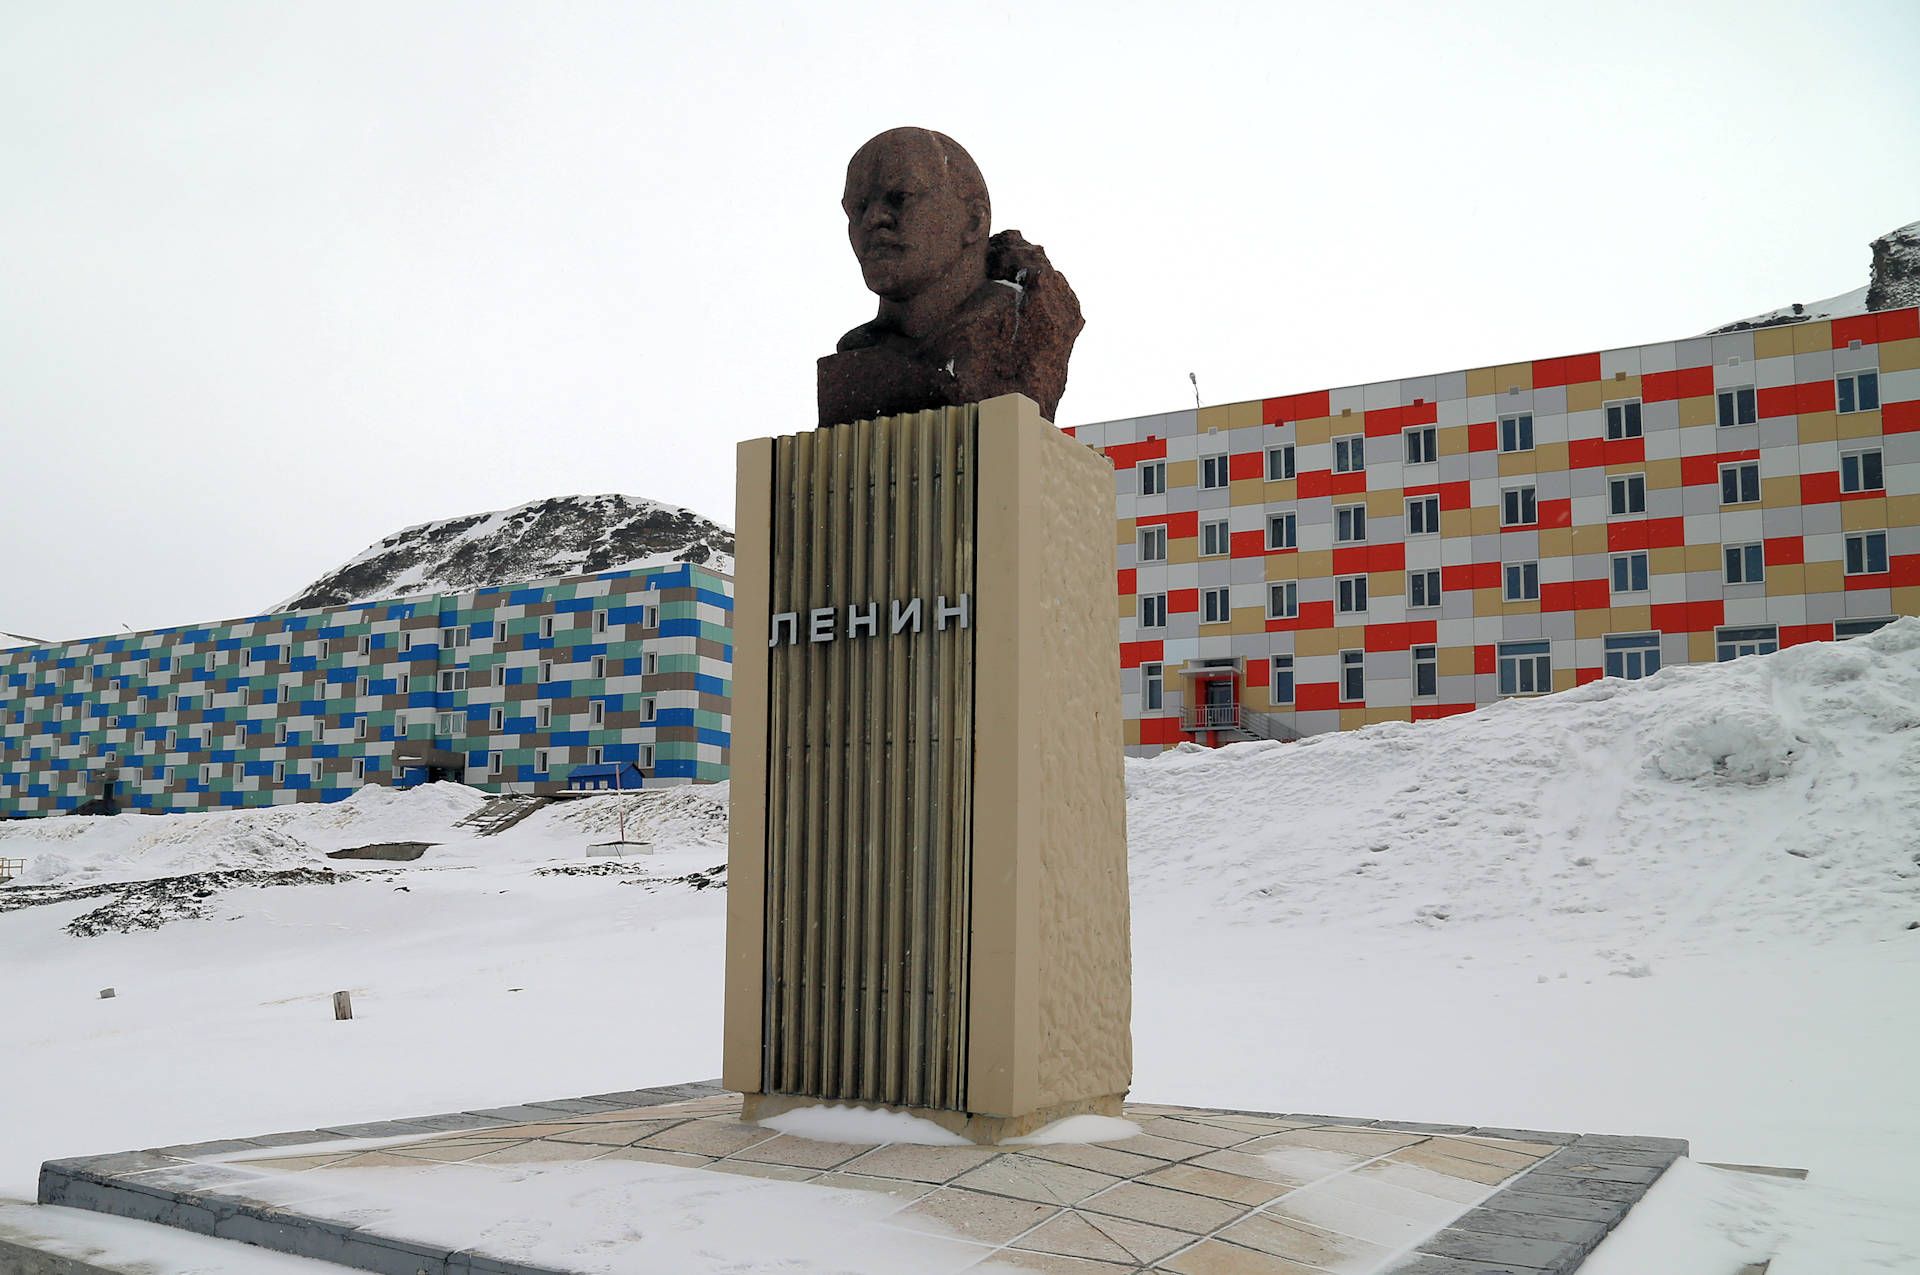 Lenin welcomed us to Barentsburg